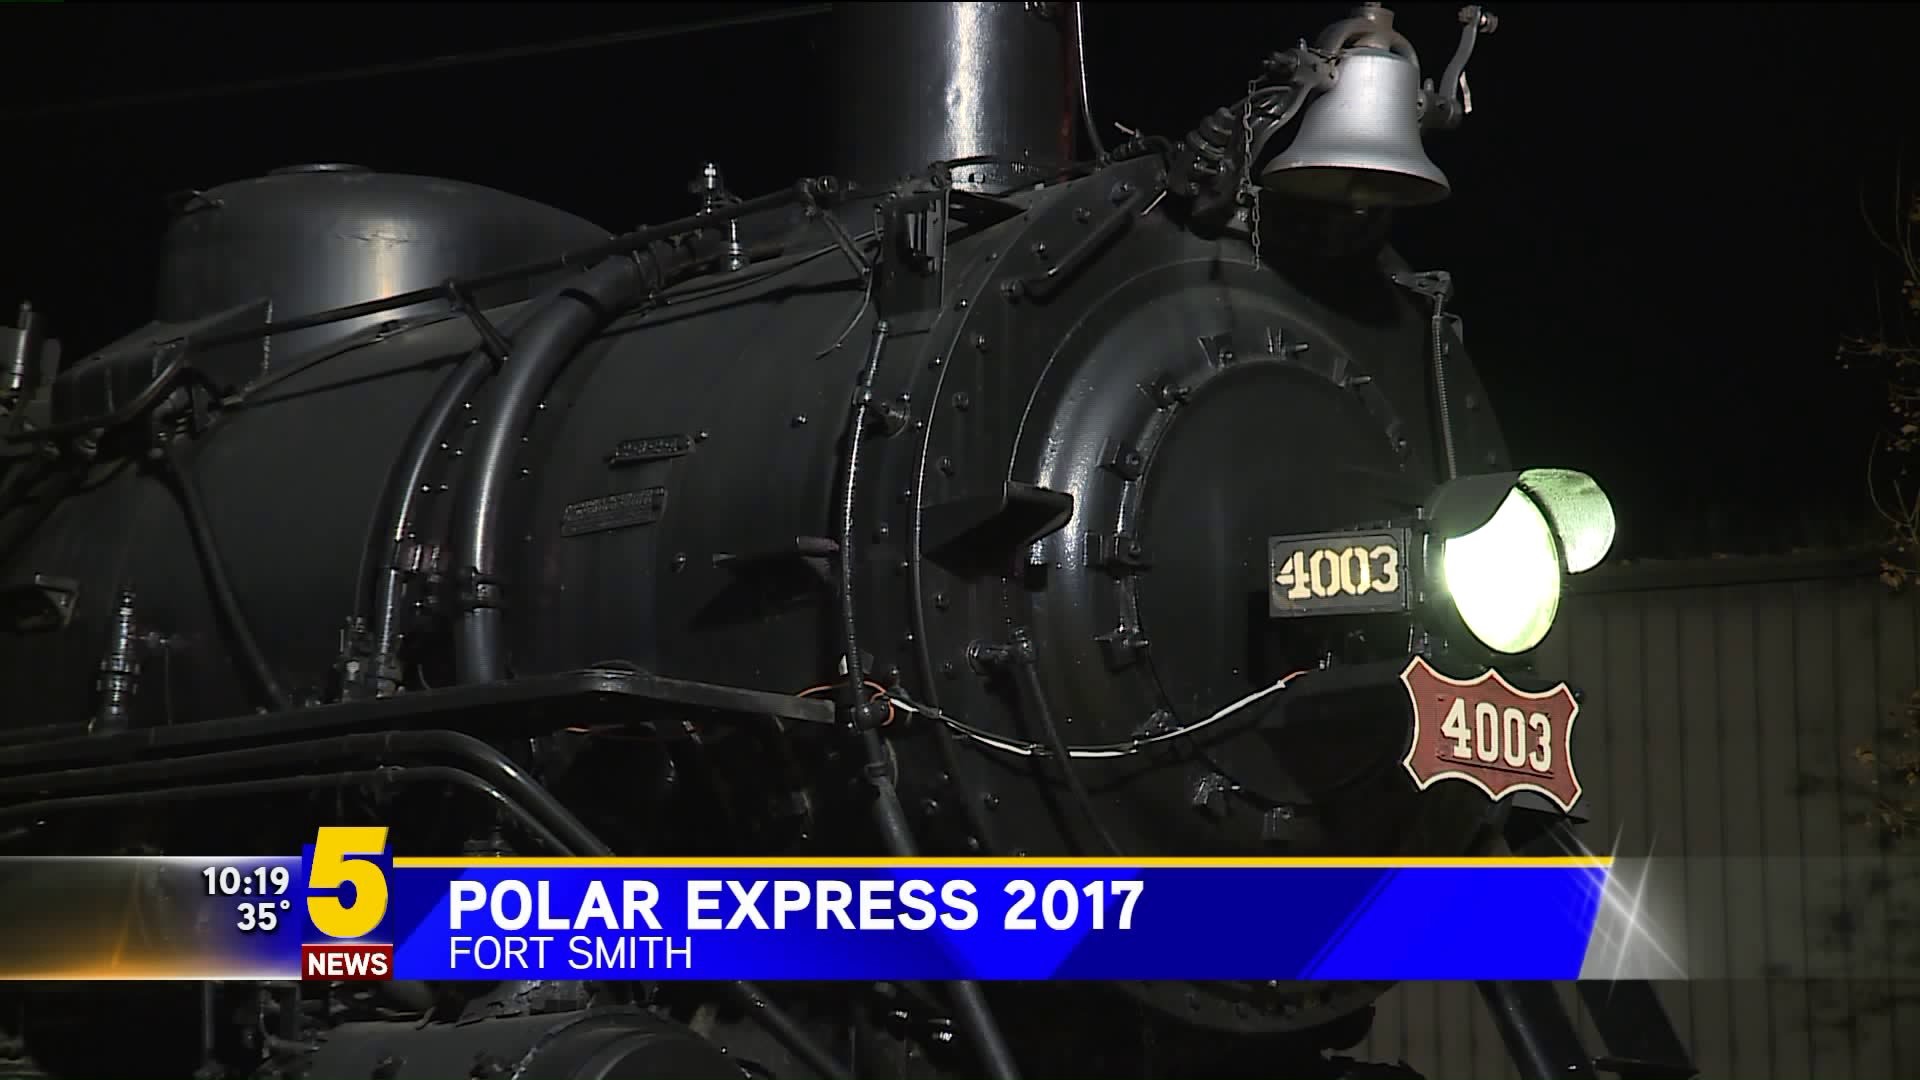 Fort Smith Polar Express